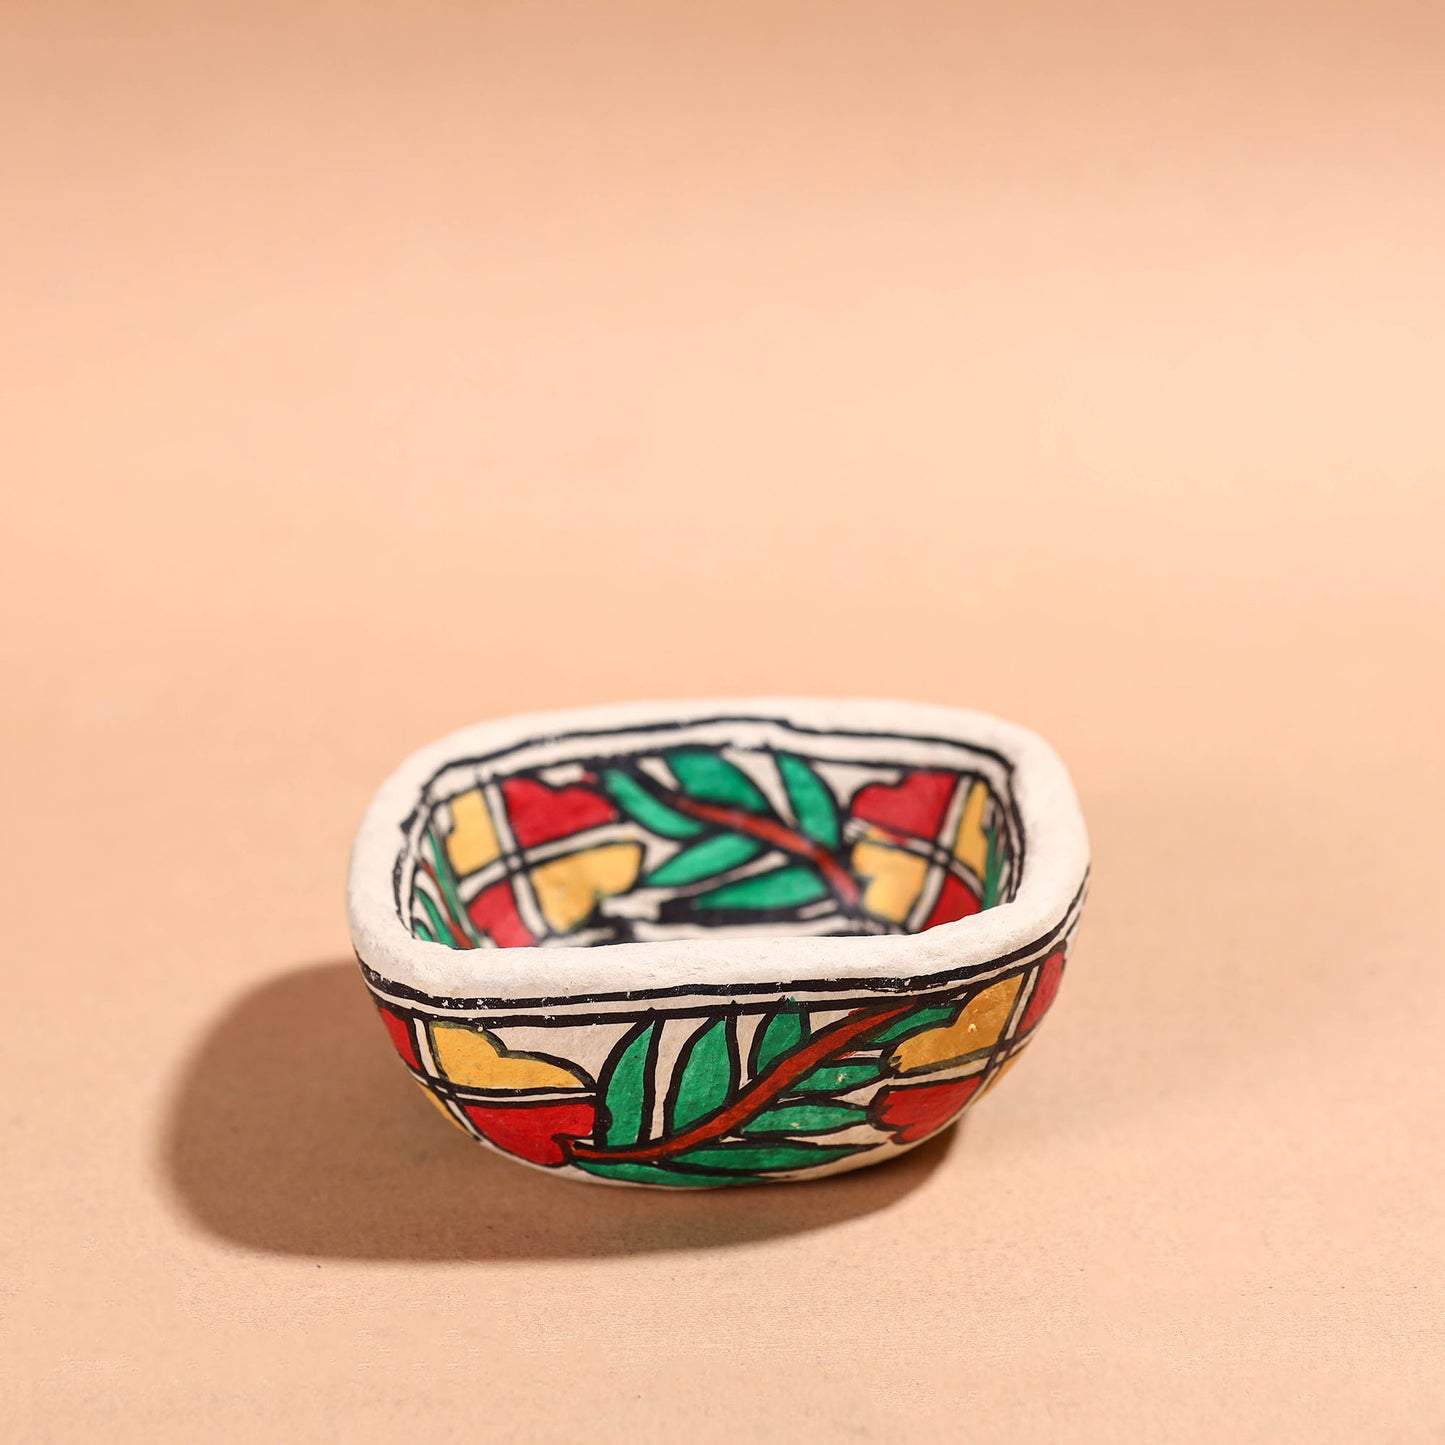 Handpainted Madhubani Paper Mache Bowl - Small